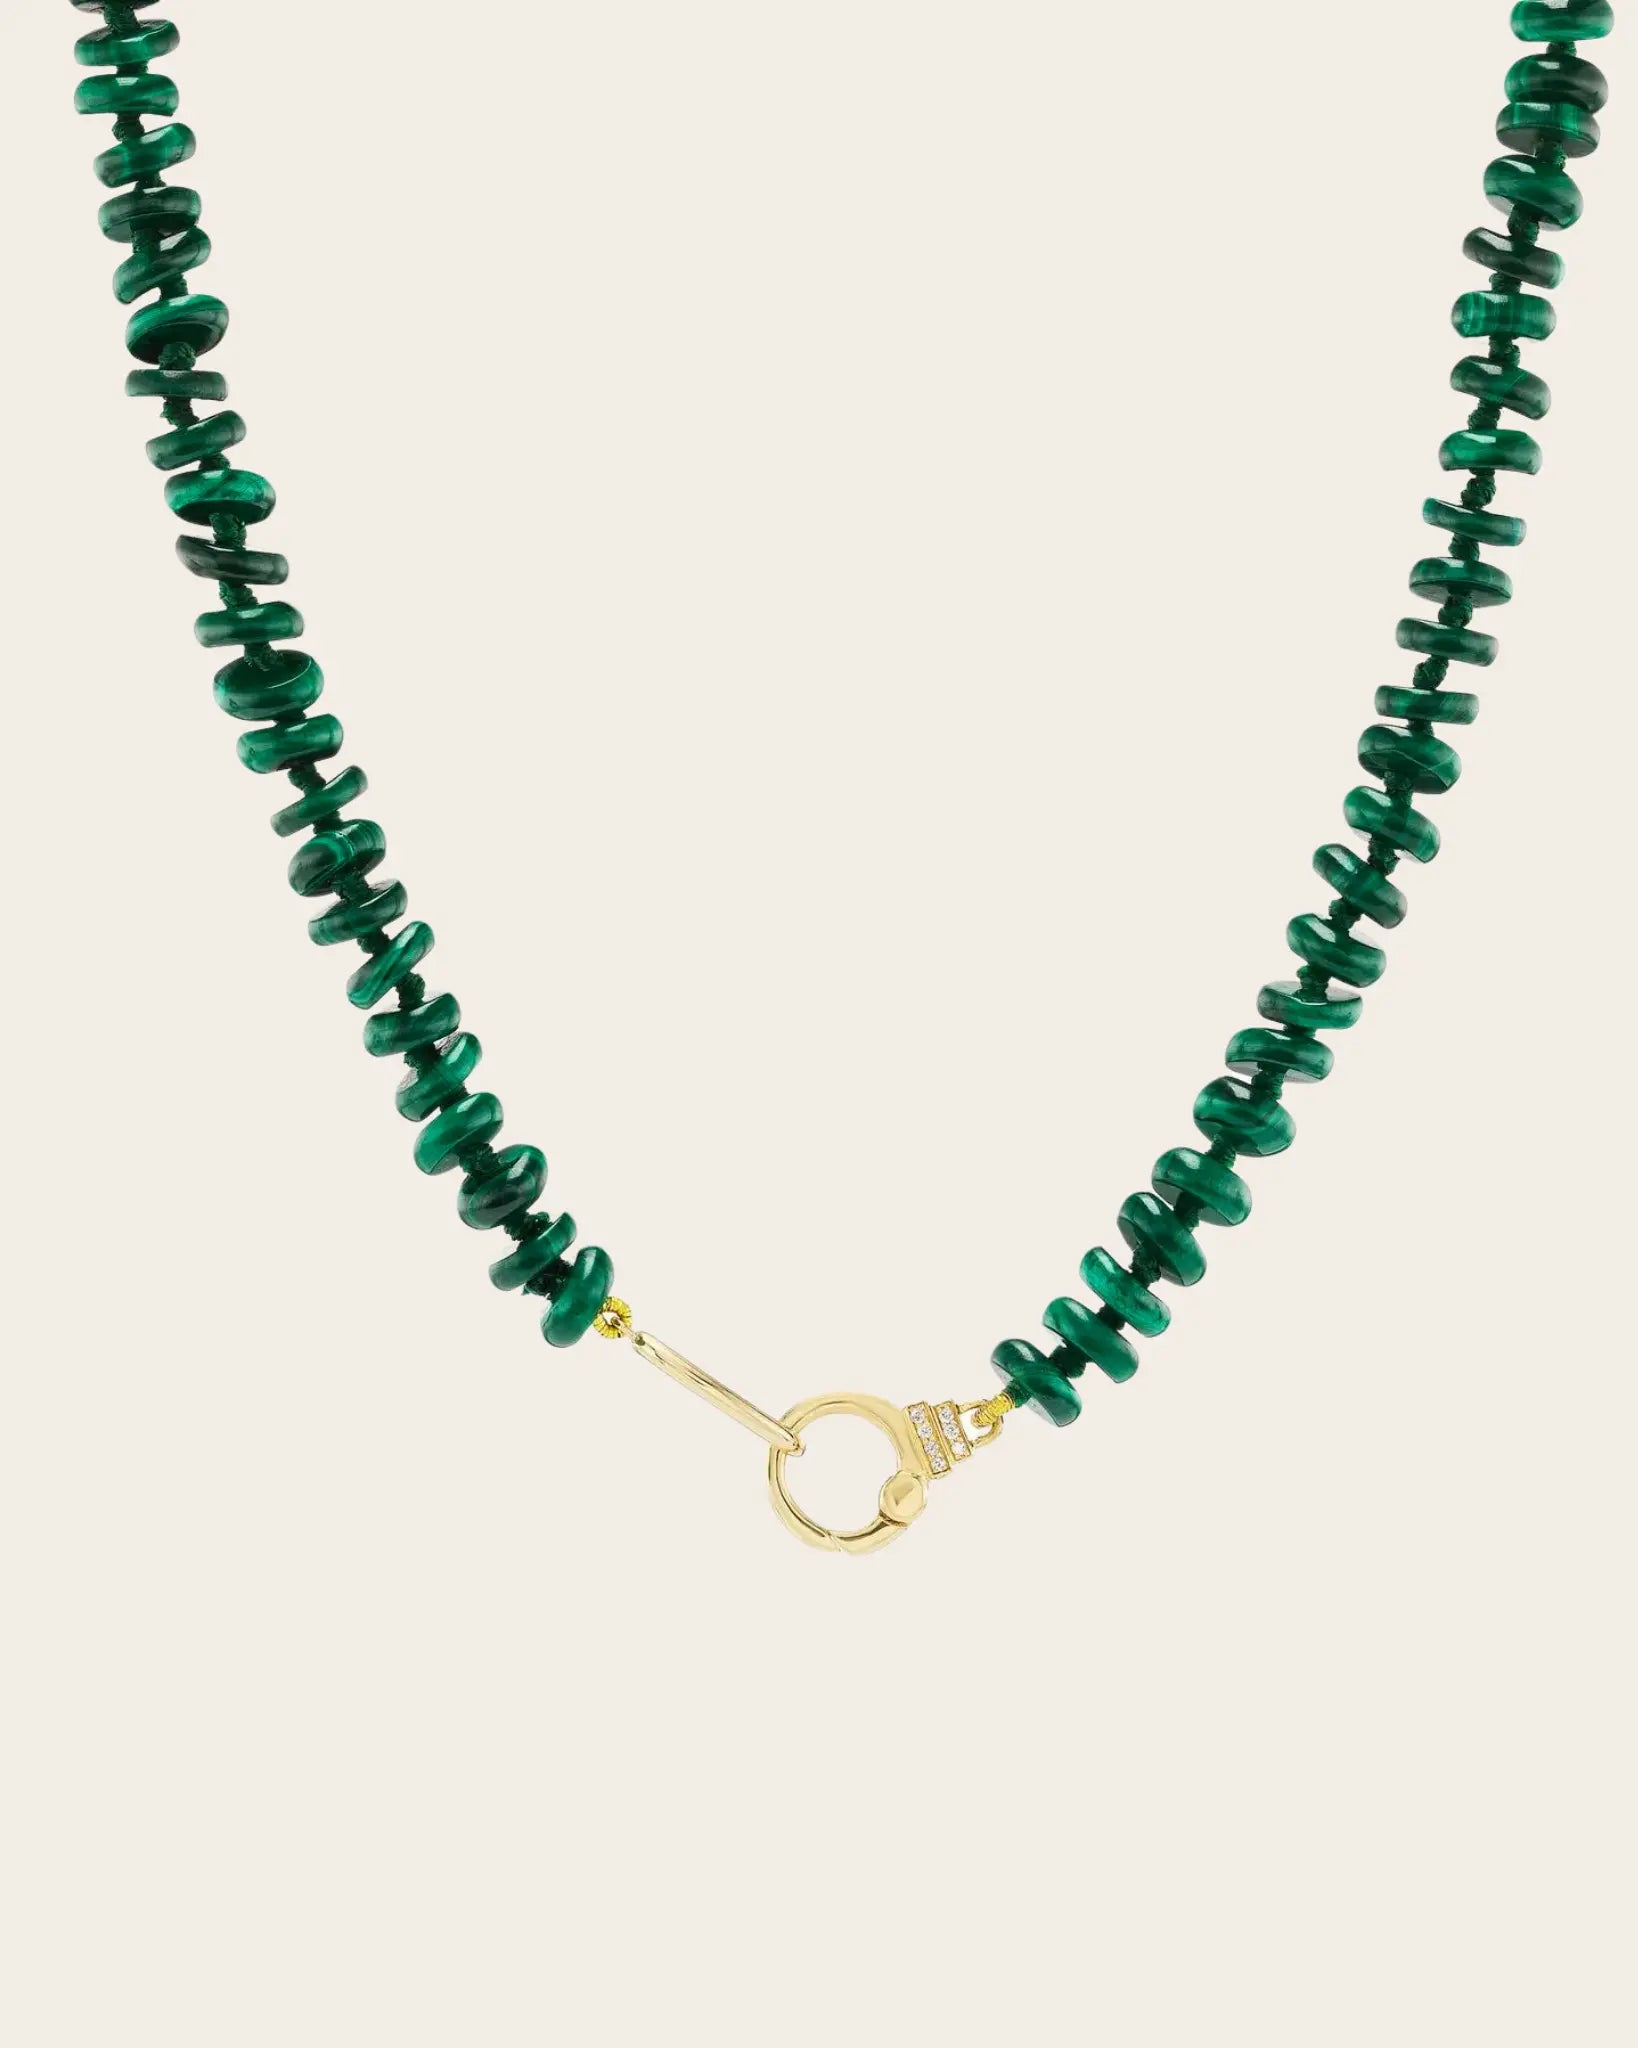 108 malachite stone beads Necklace With Cotton tassel Pendant,male and  female necklace yoga,Meditation,108 Mala,Dropshipping